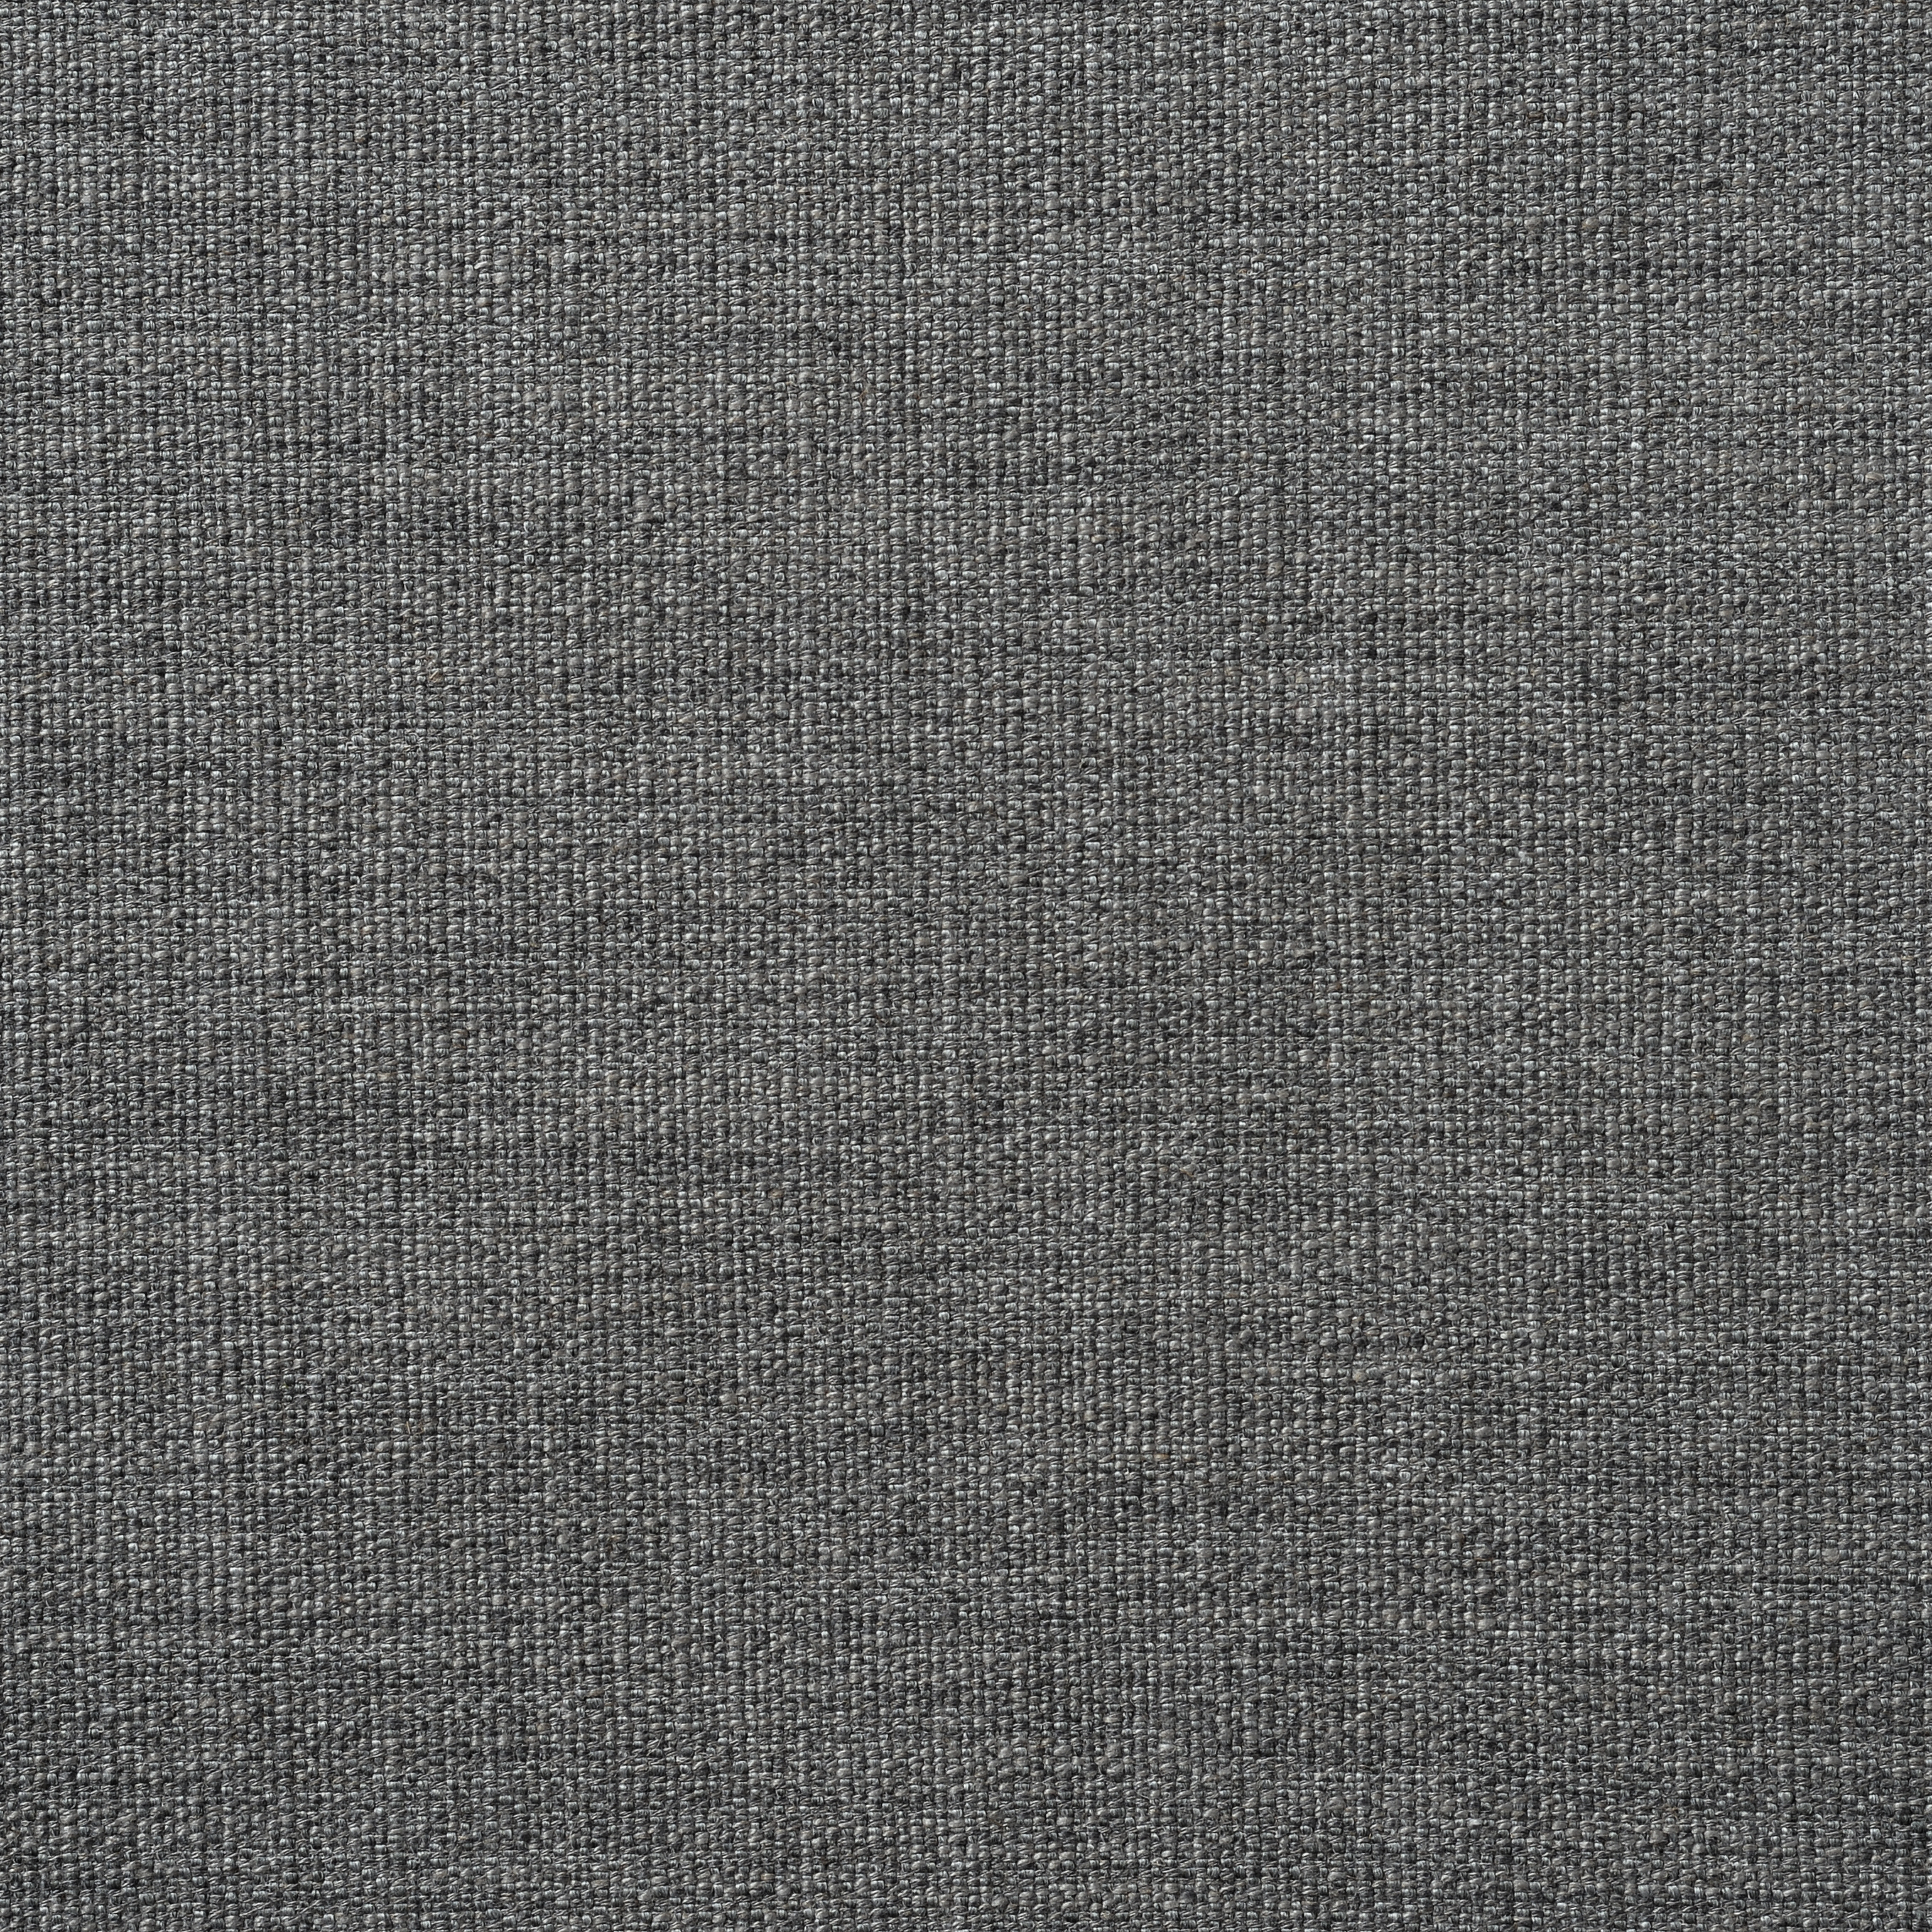 Austen Rustic Weave - Grey Marl